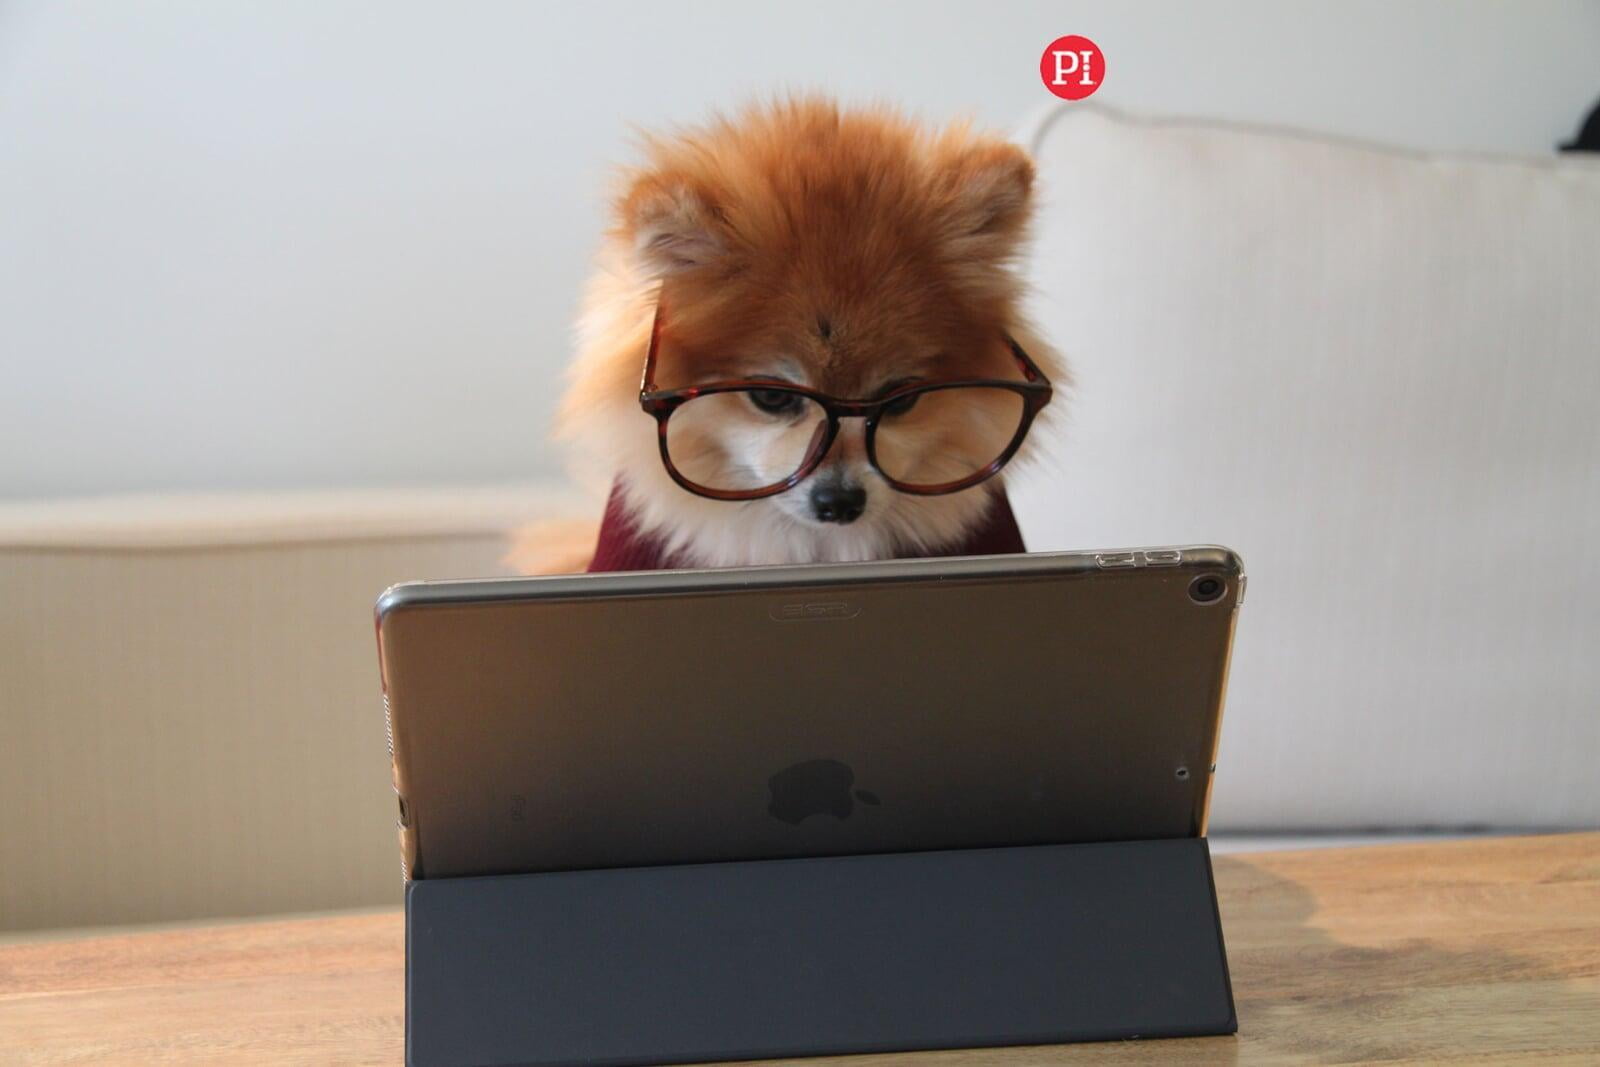 Pomeranian on laptop, PI logo top right